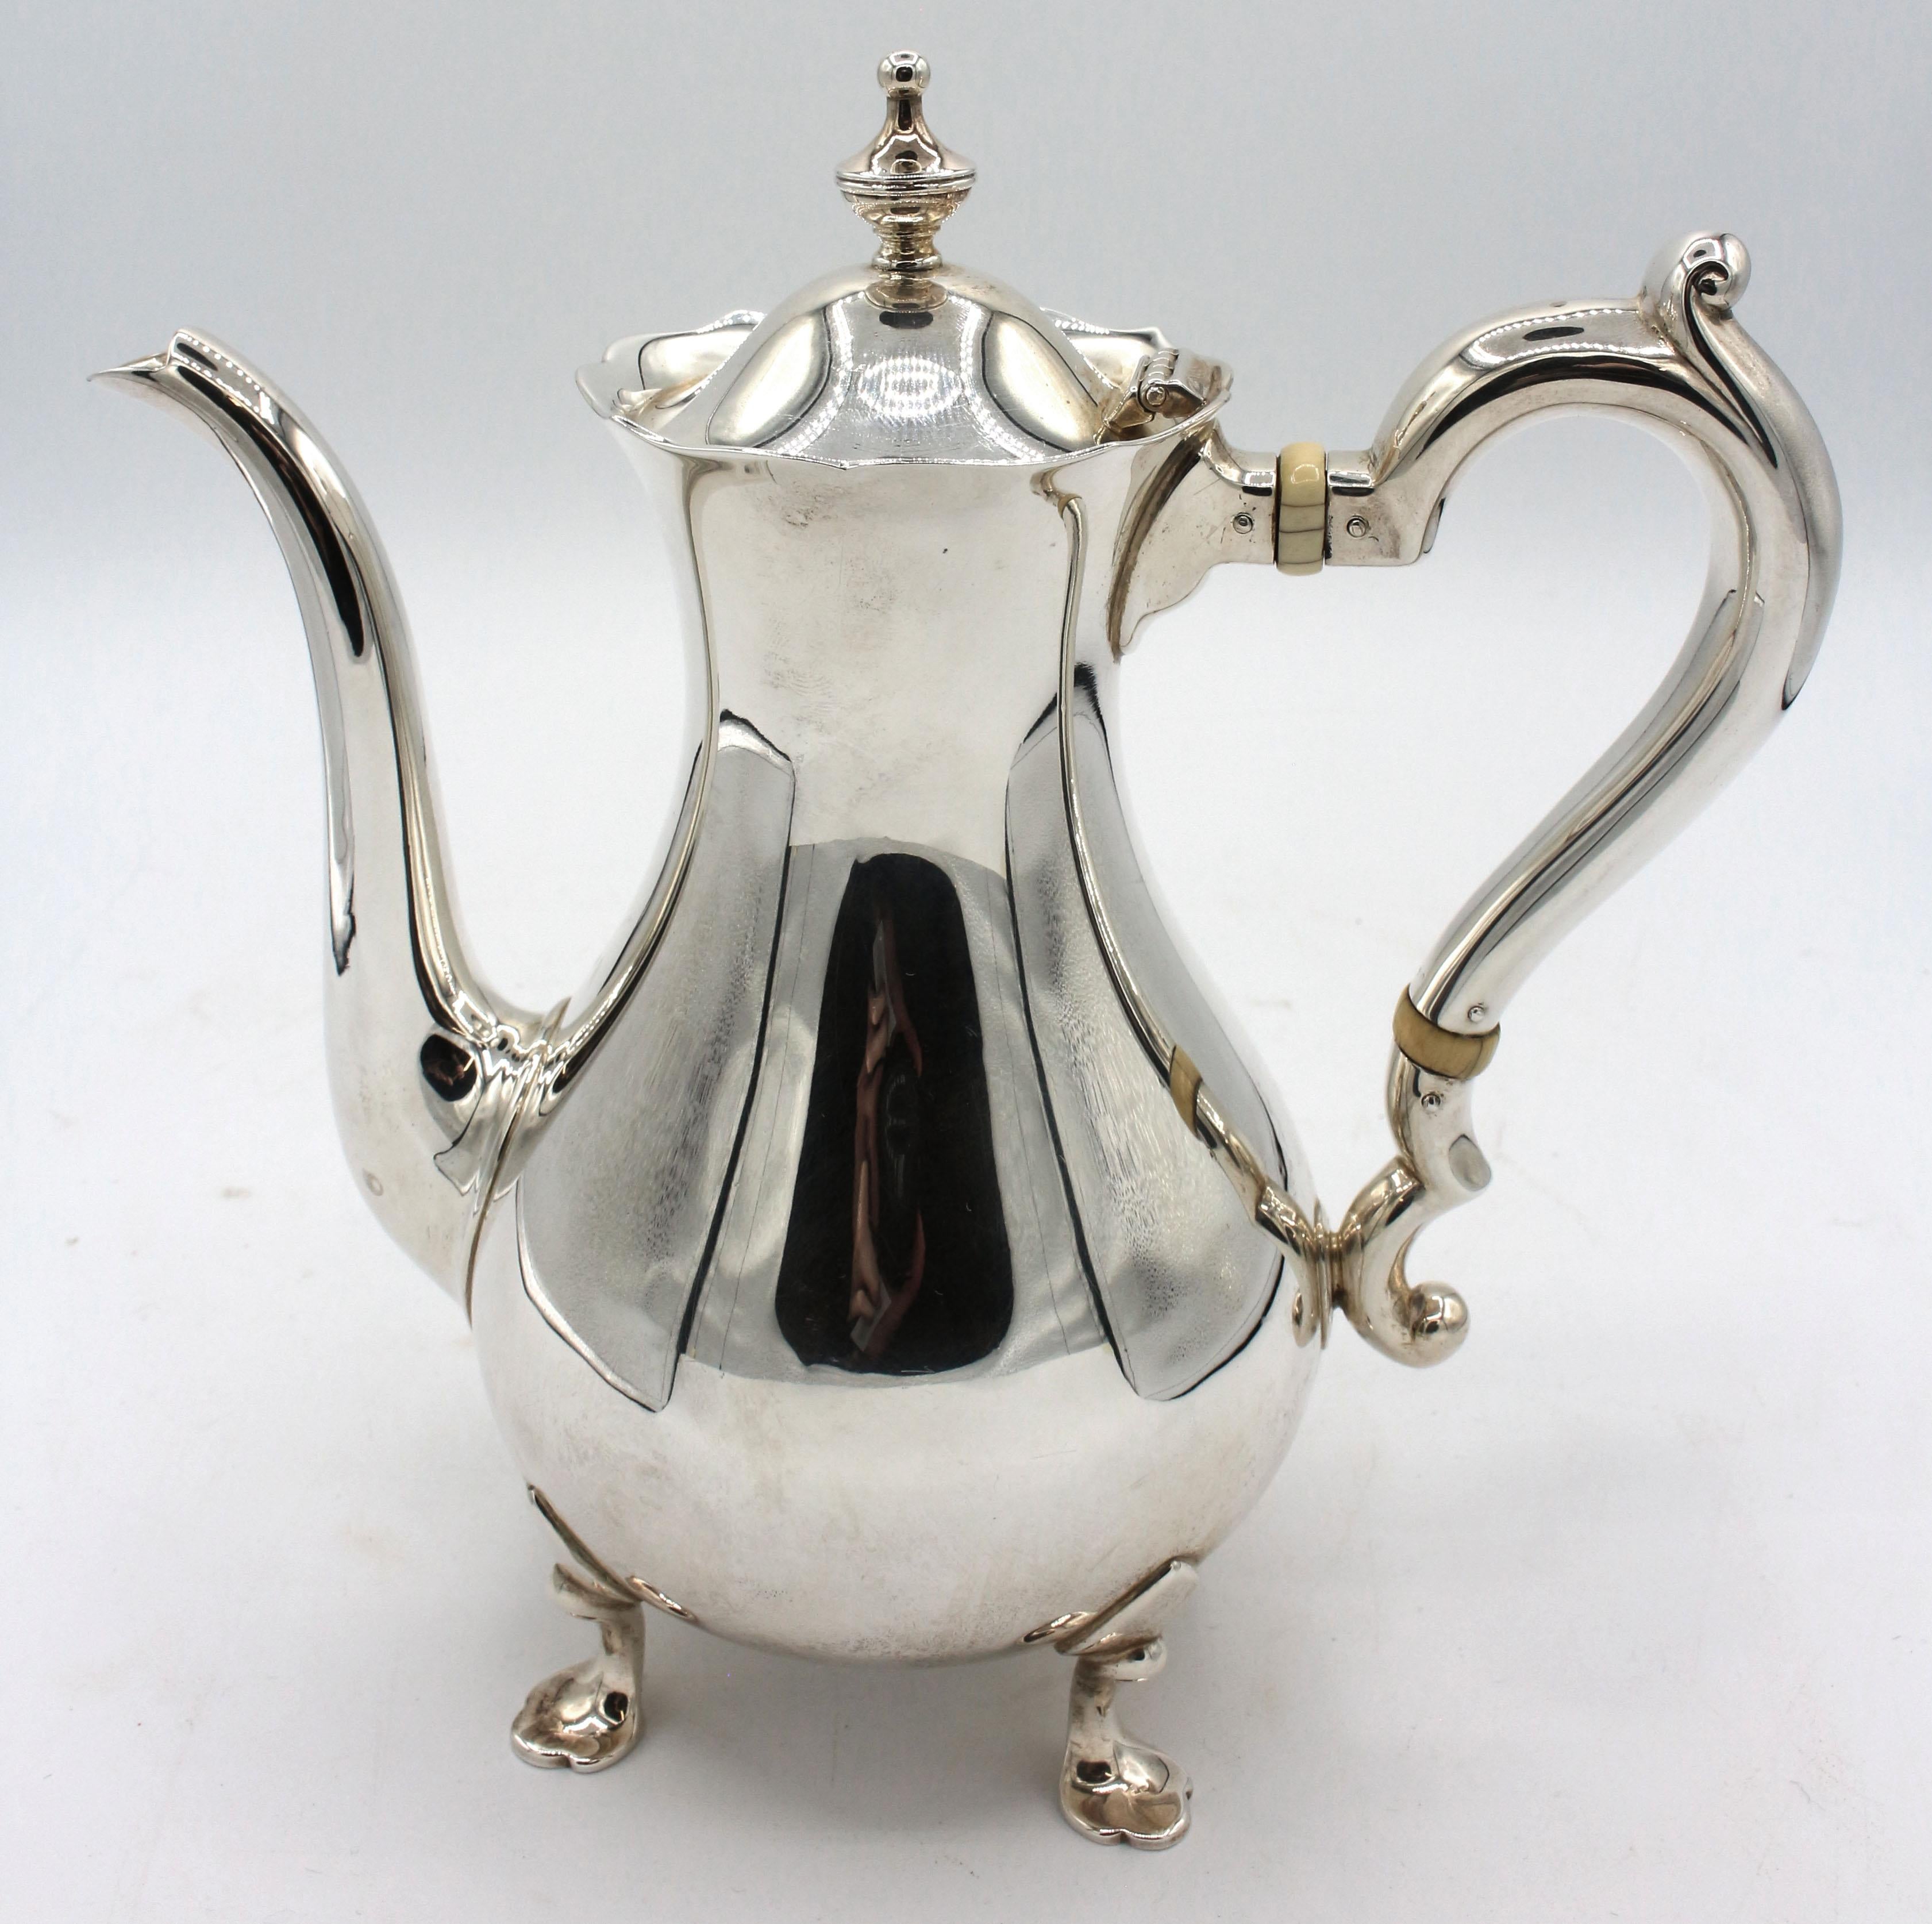 Sterling silver demitasse pot by Gorham, early 20th century. Georgian taste raised on 4 trifid feet. One dimple on side. 1 1/2 pint capacity. 15.90 troy oz.
7.75